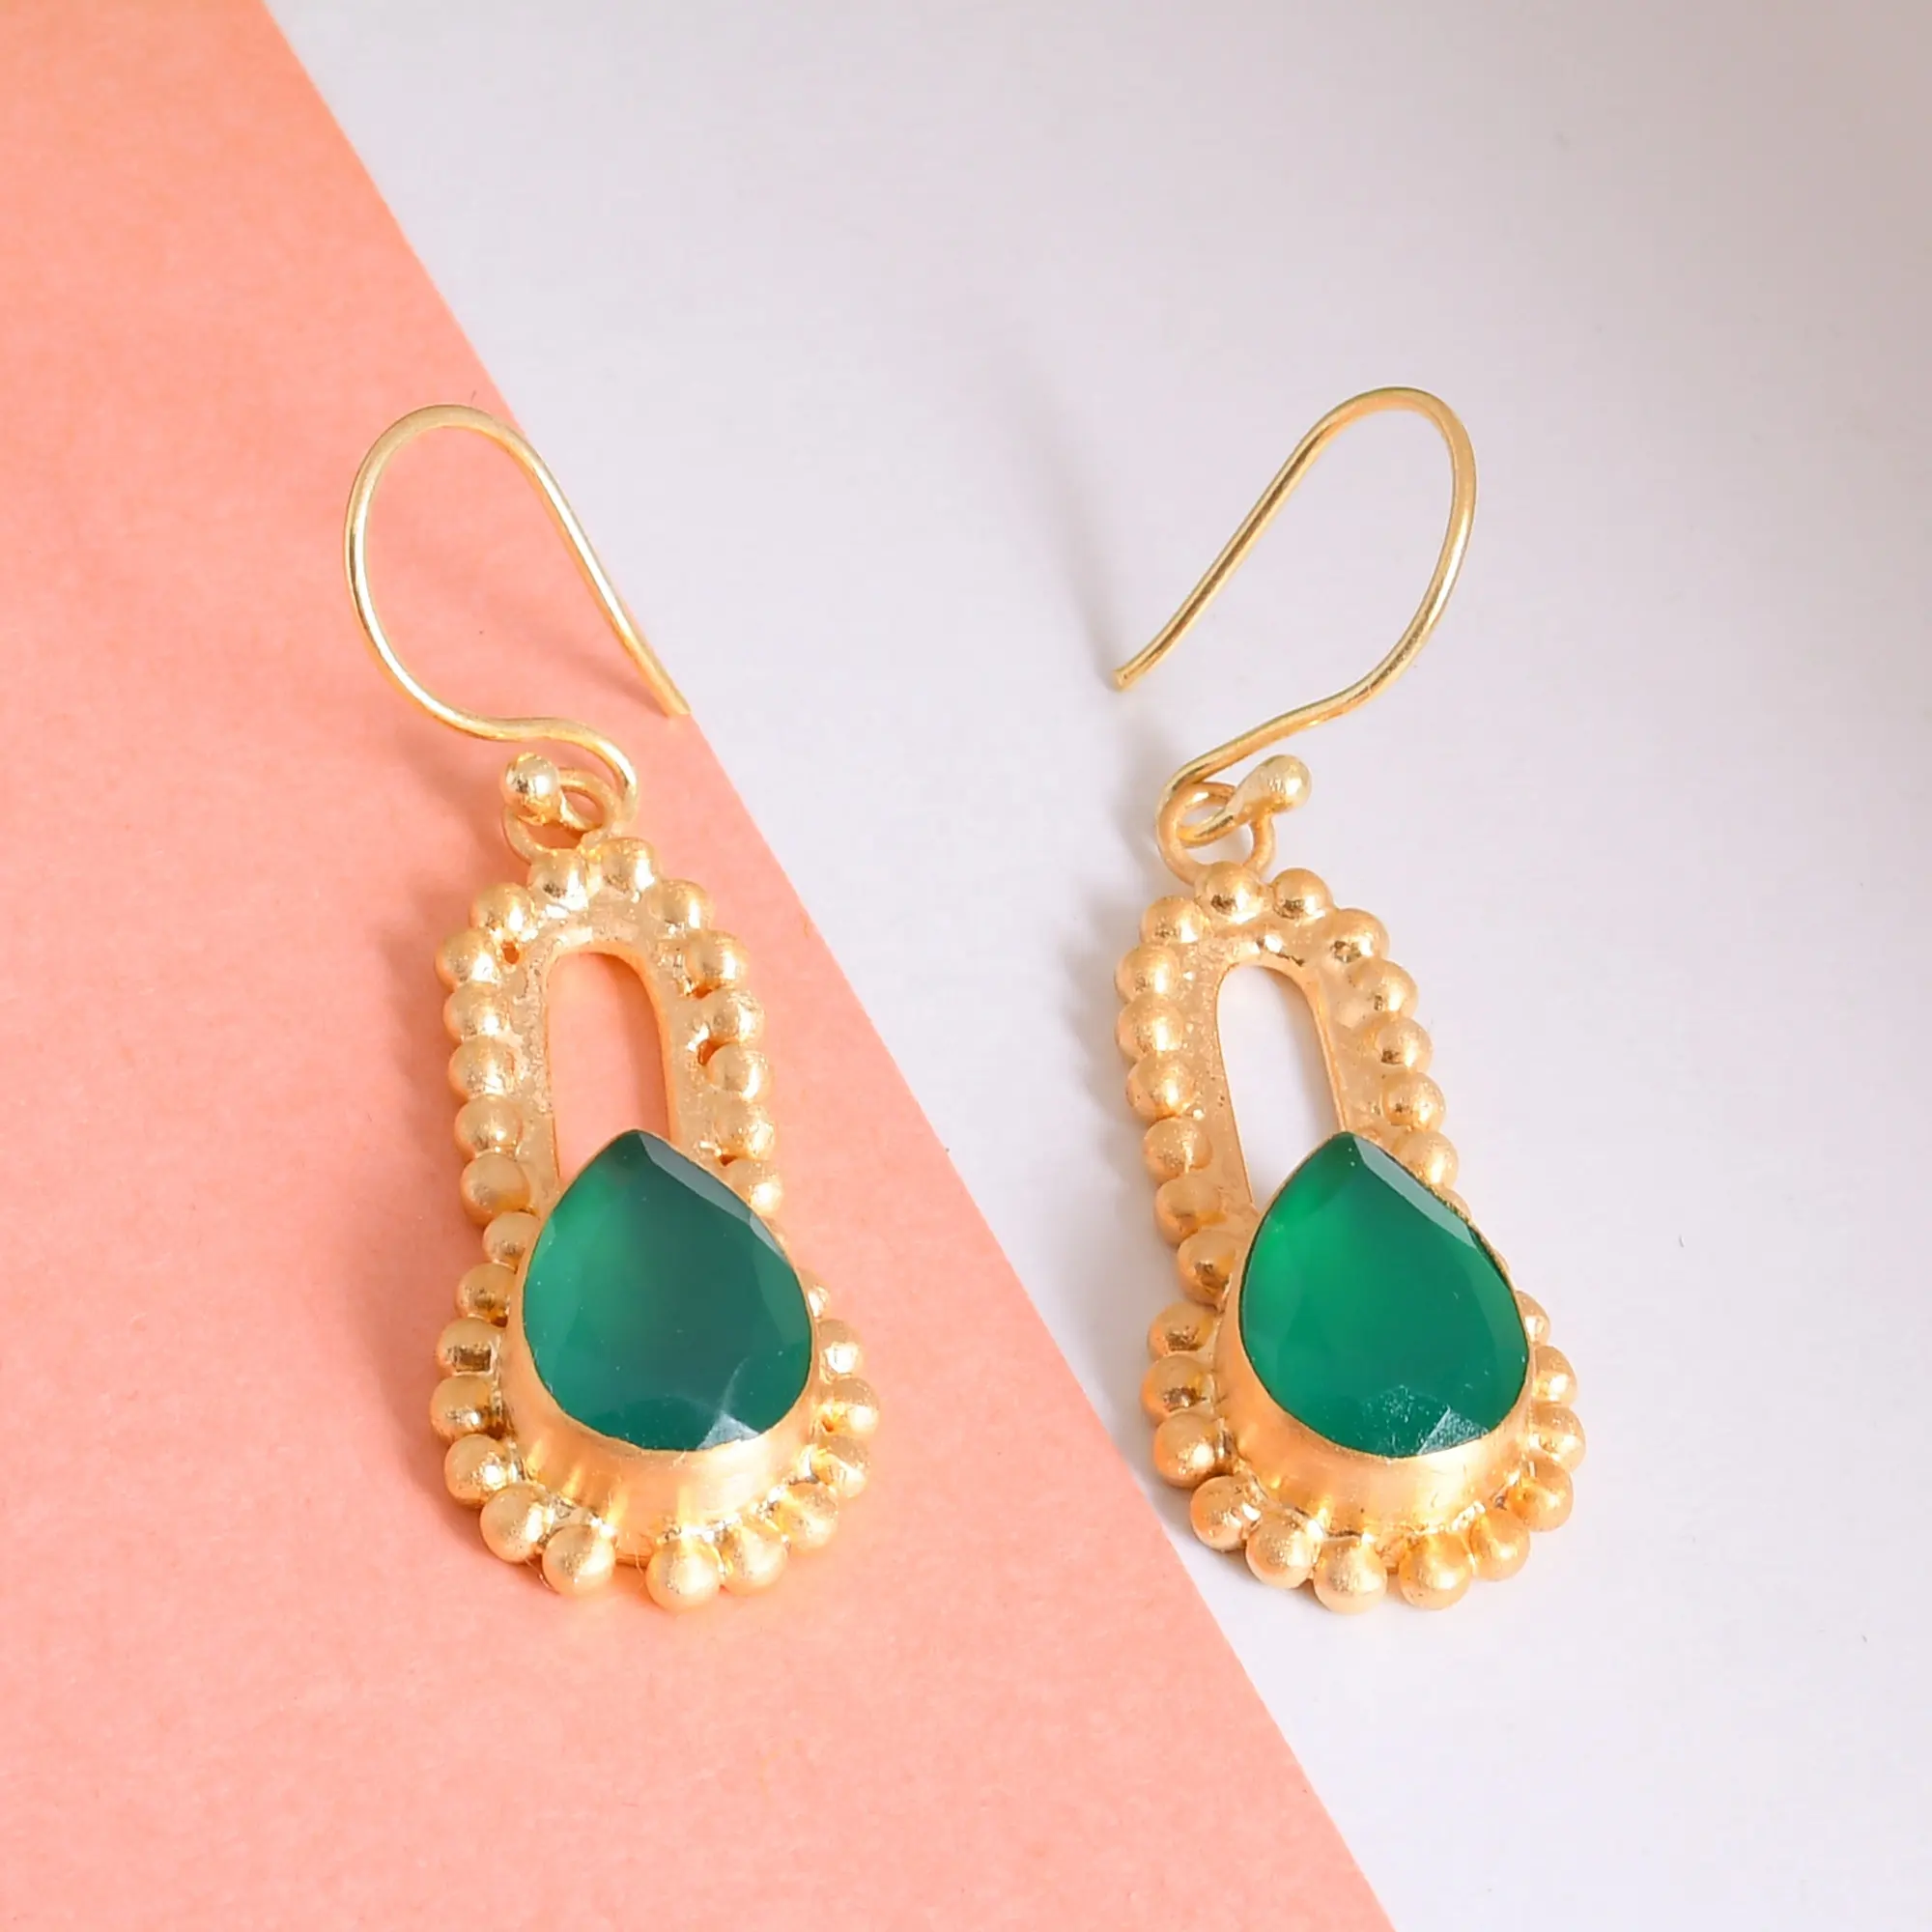 New Stylish 18K Gold Plated Green Onyx Earrings, Bohemian Fashion Jewellery Manufacturers, Pear Shape Earrings